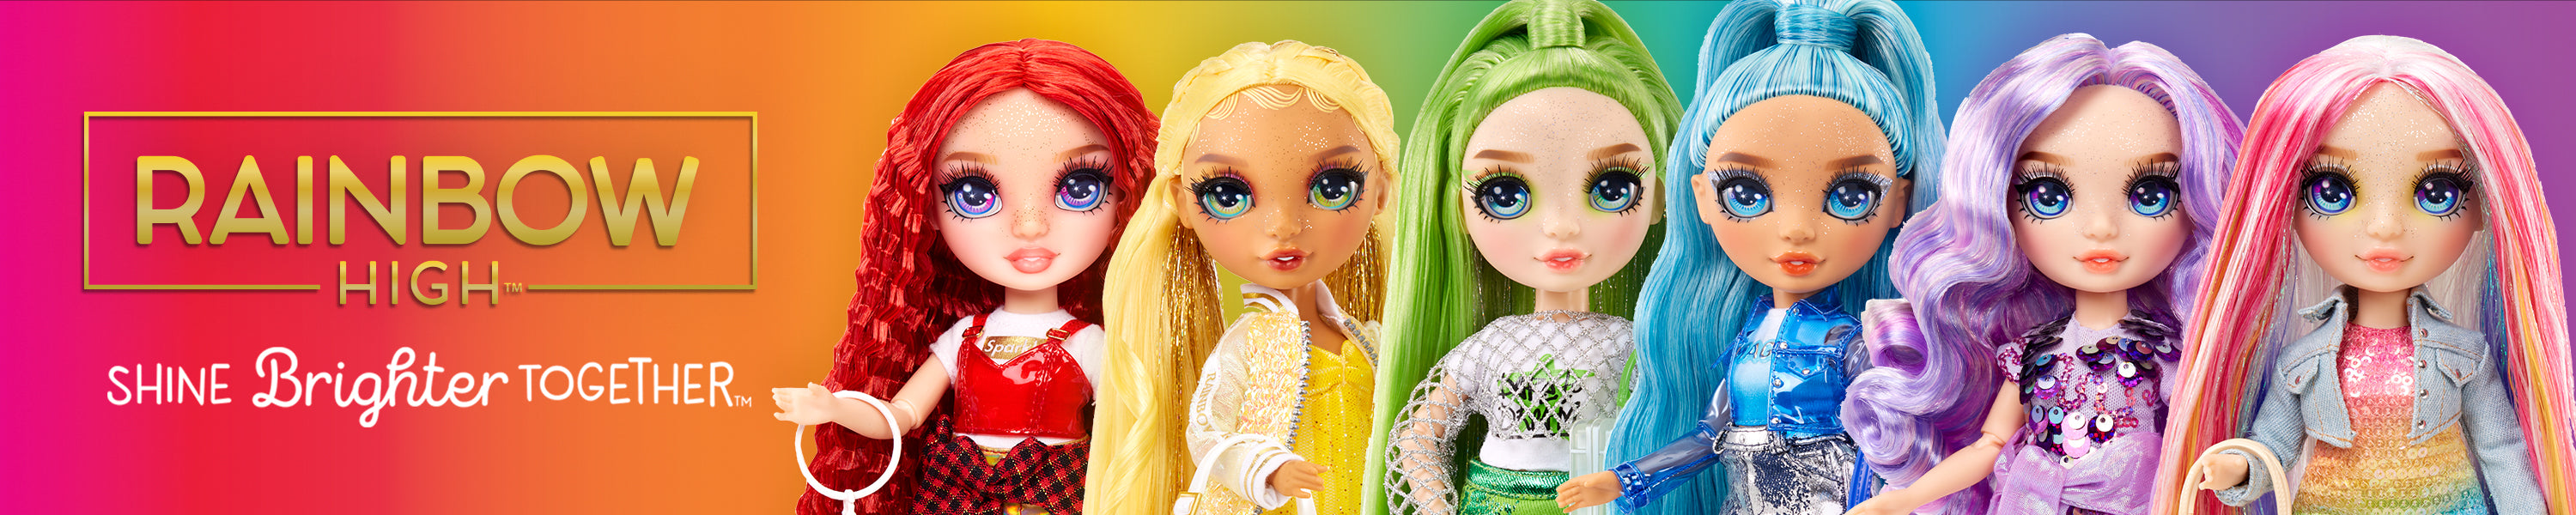 Rainbow High Dolls Online UK - Unicorn & Punkboi